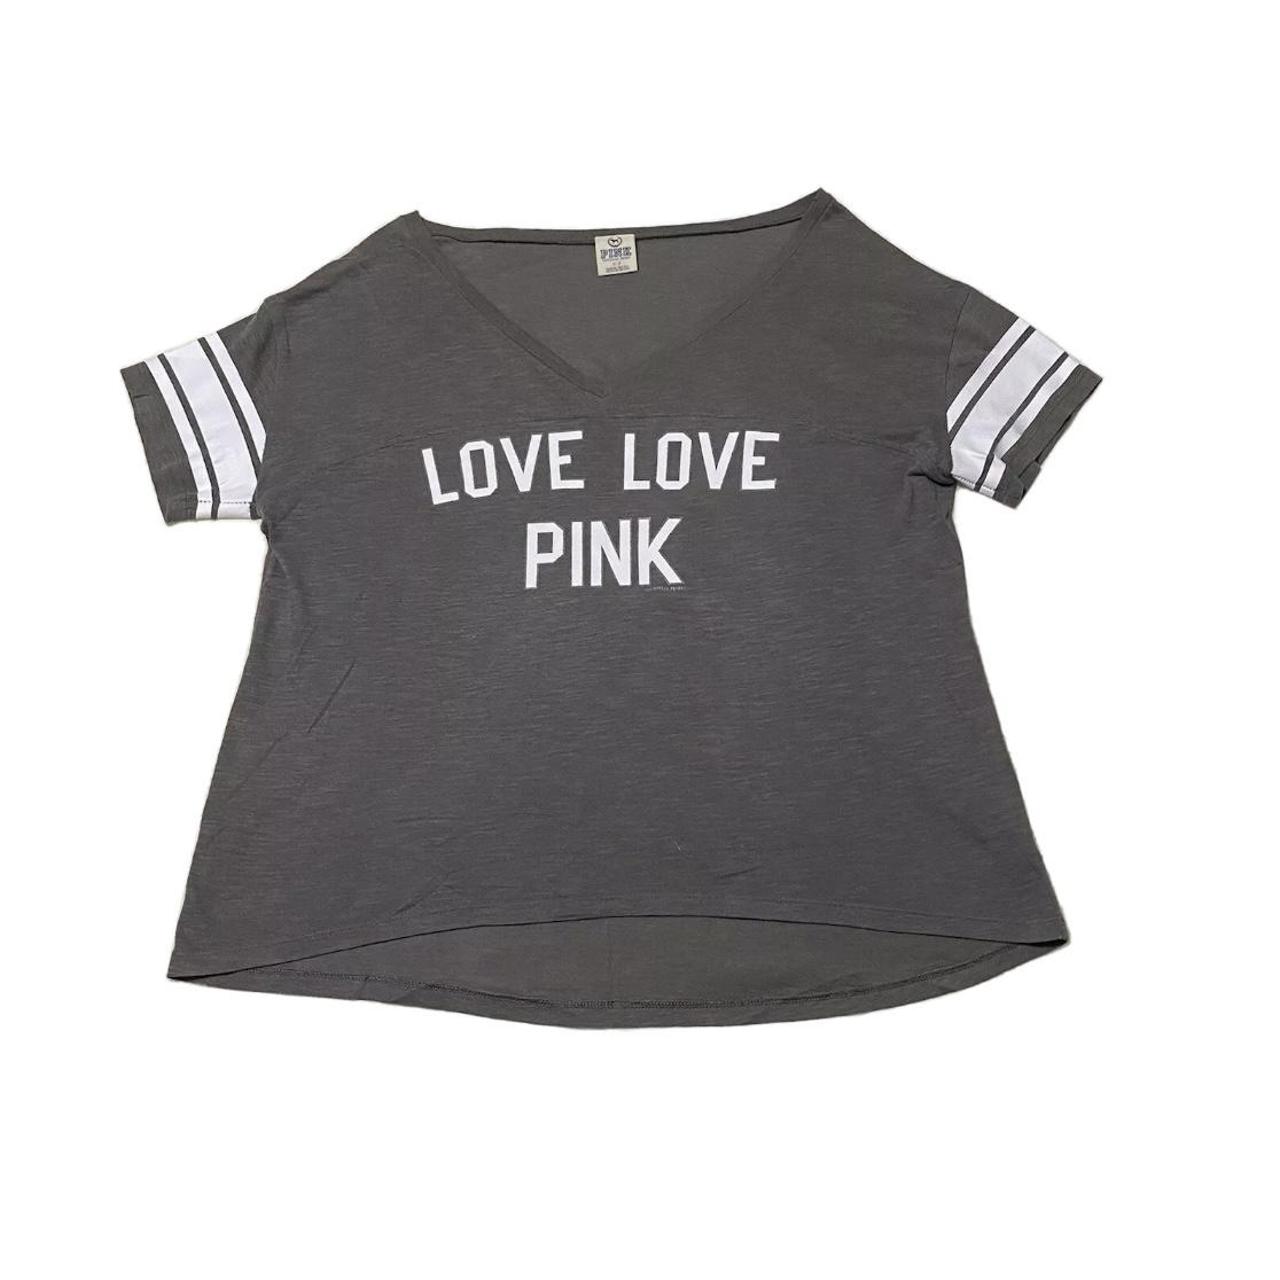 Product Image 1 - Grey Pink Shirt 
Real nice